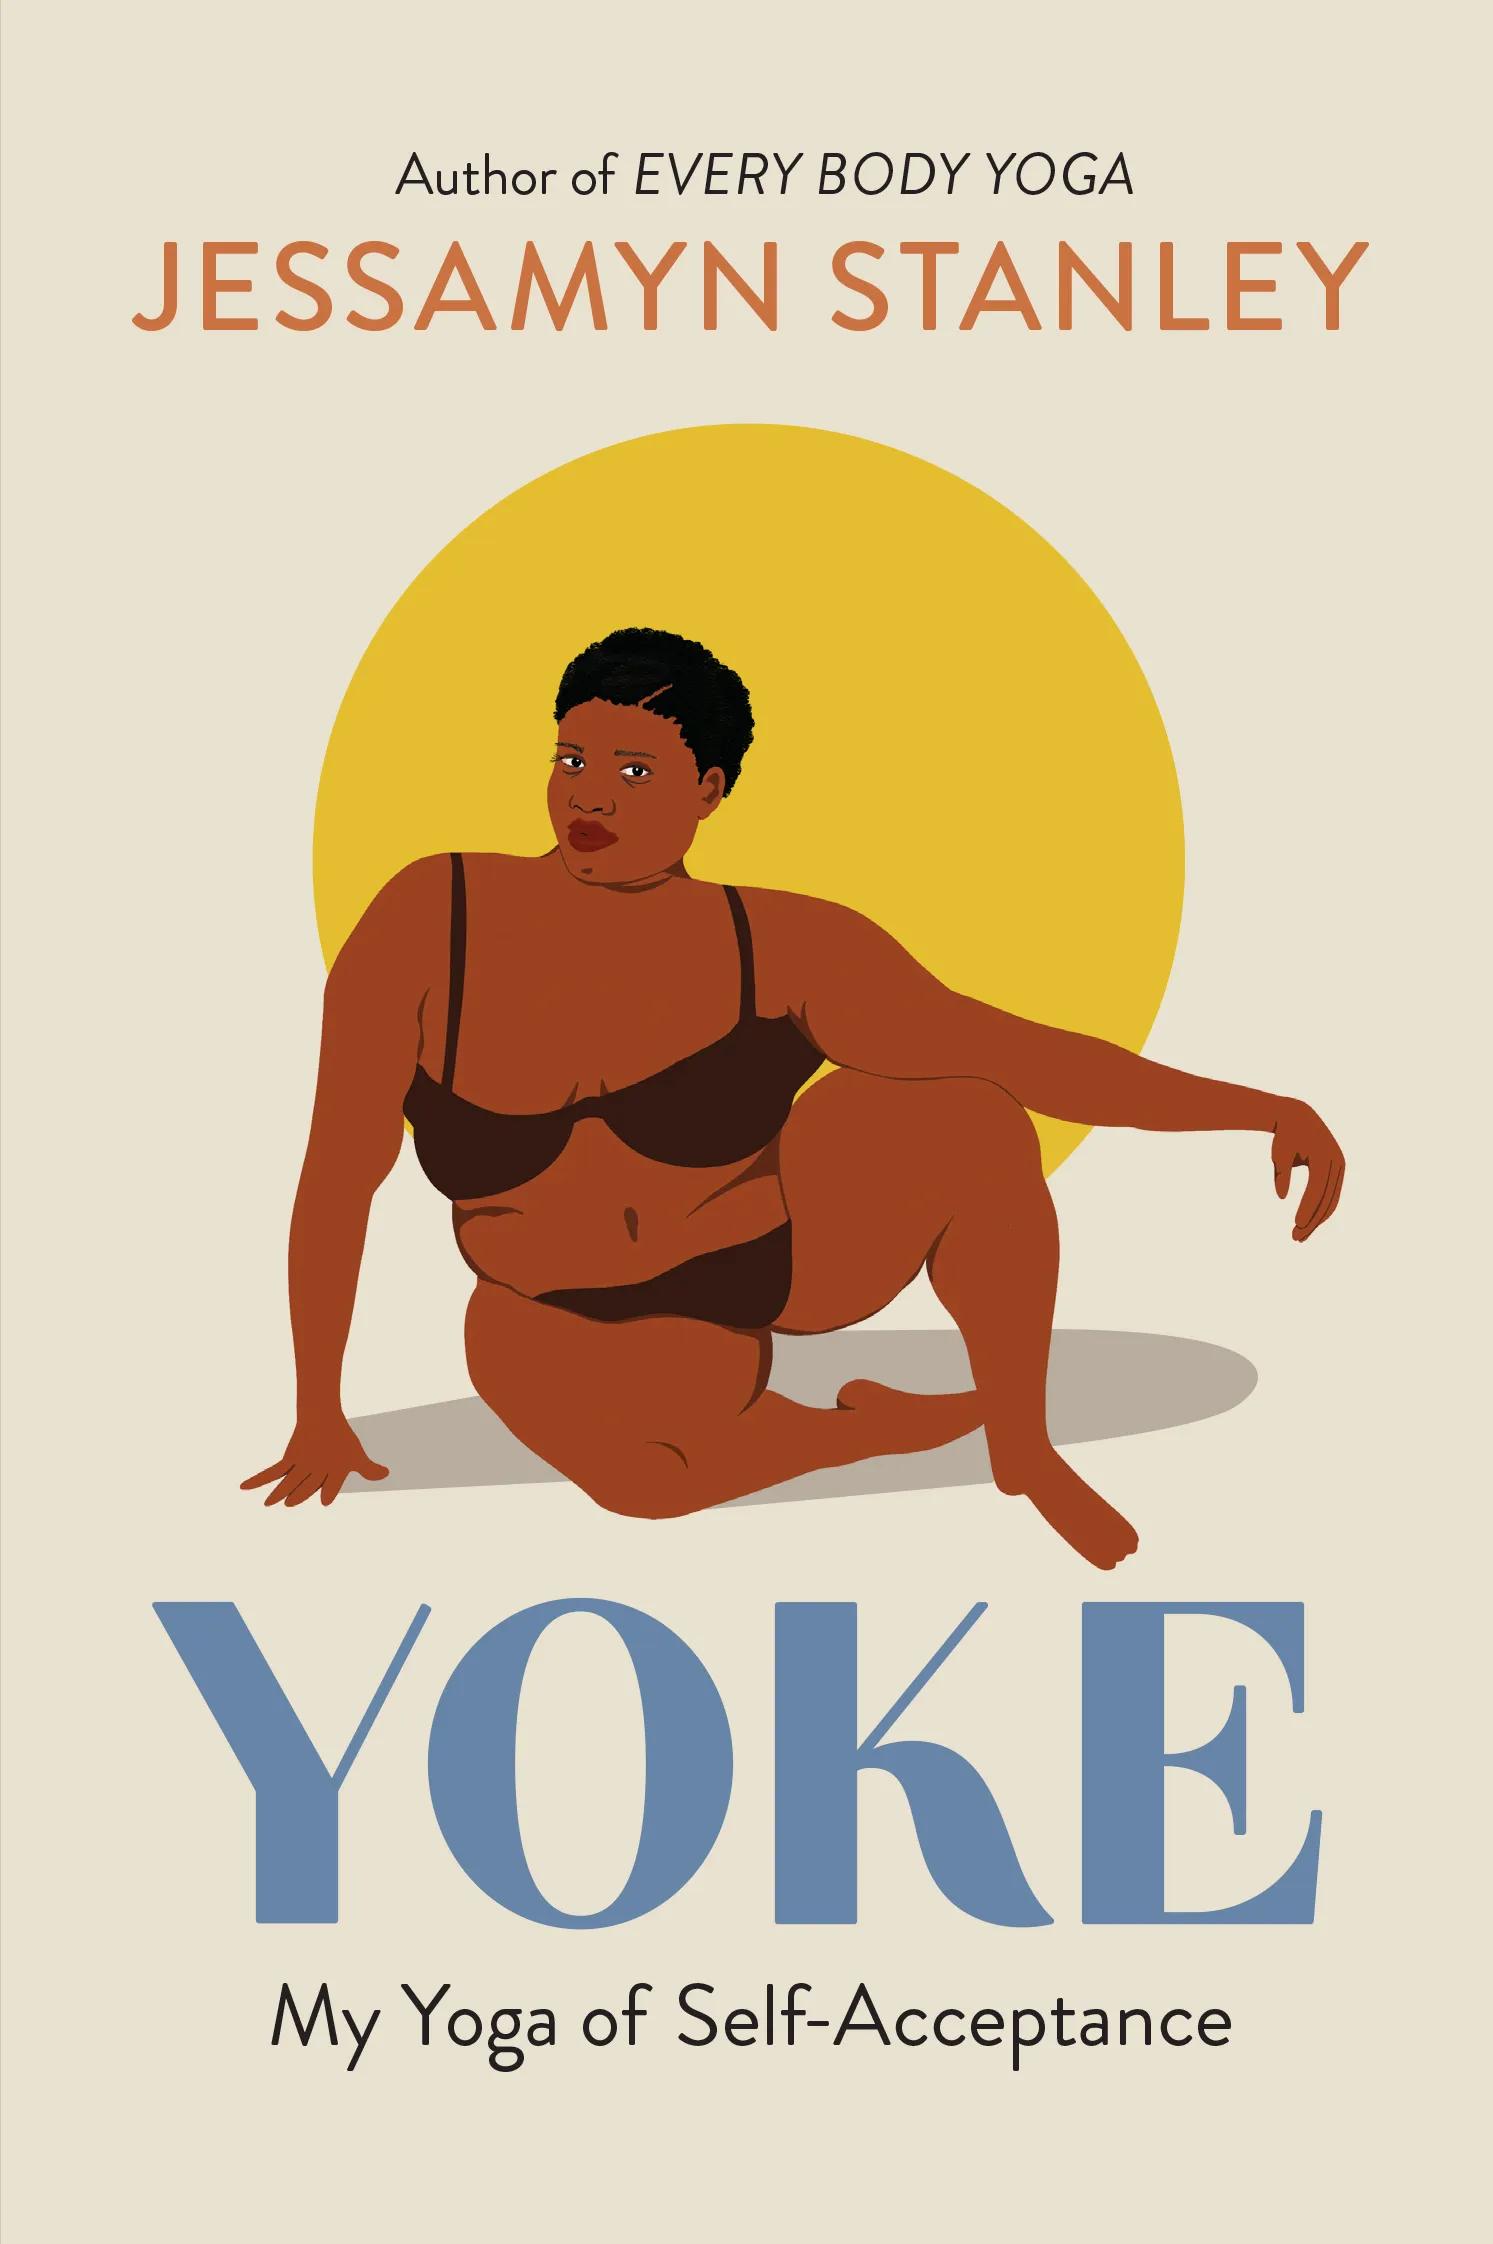 yoga means to yoke - What Sanskrit word means yoke